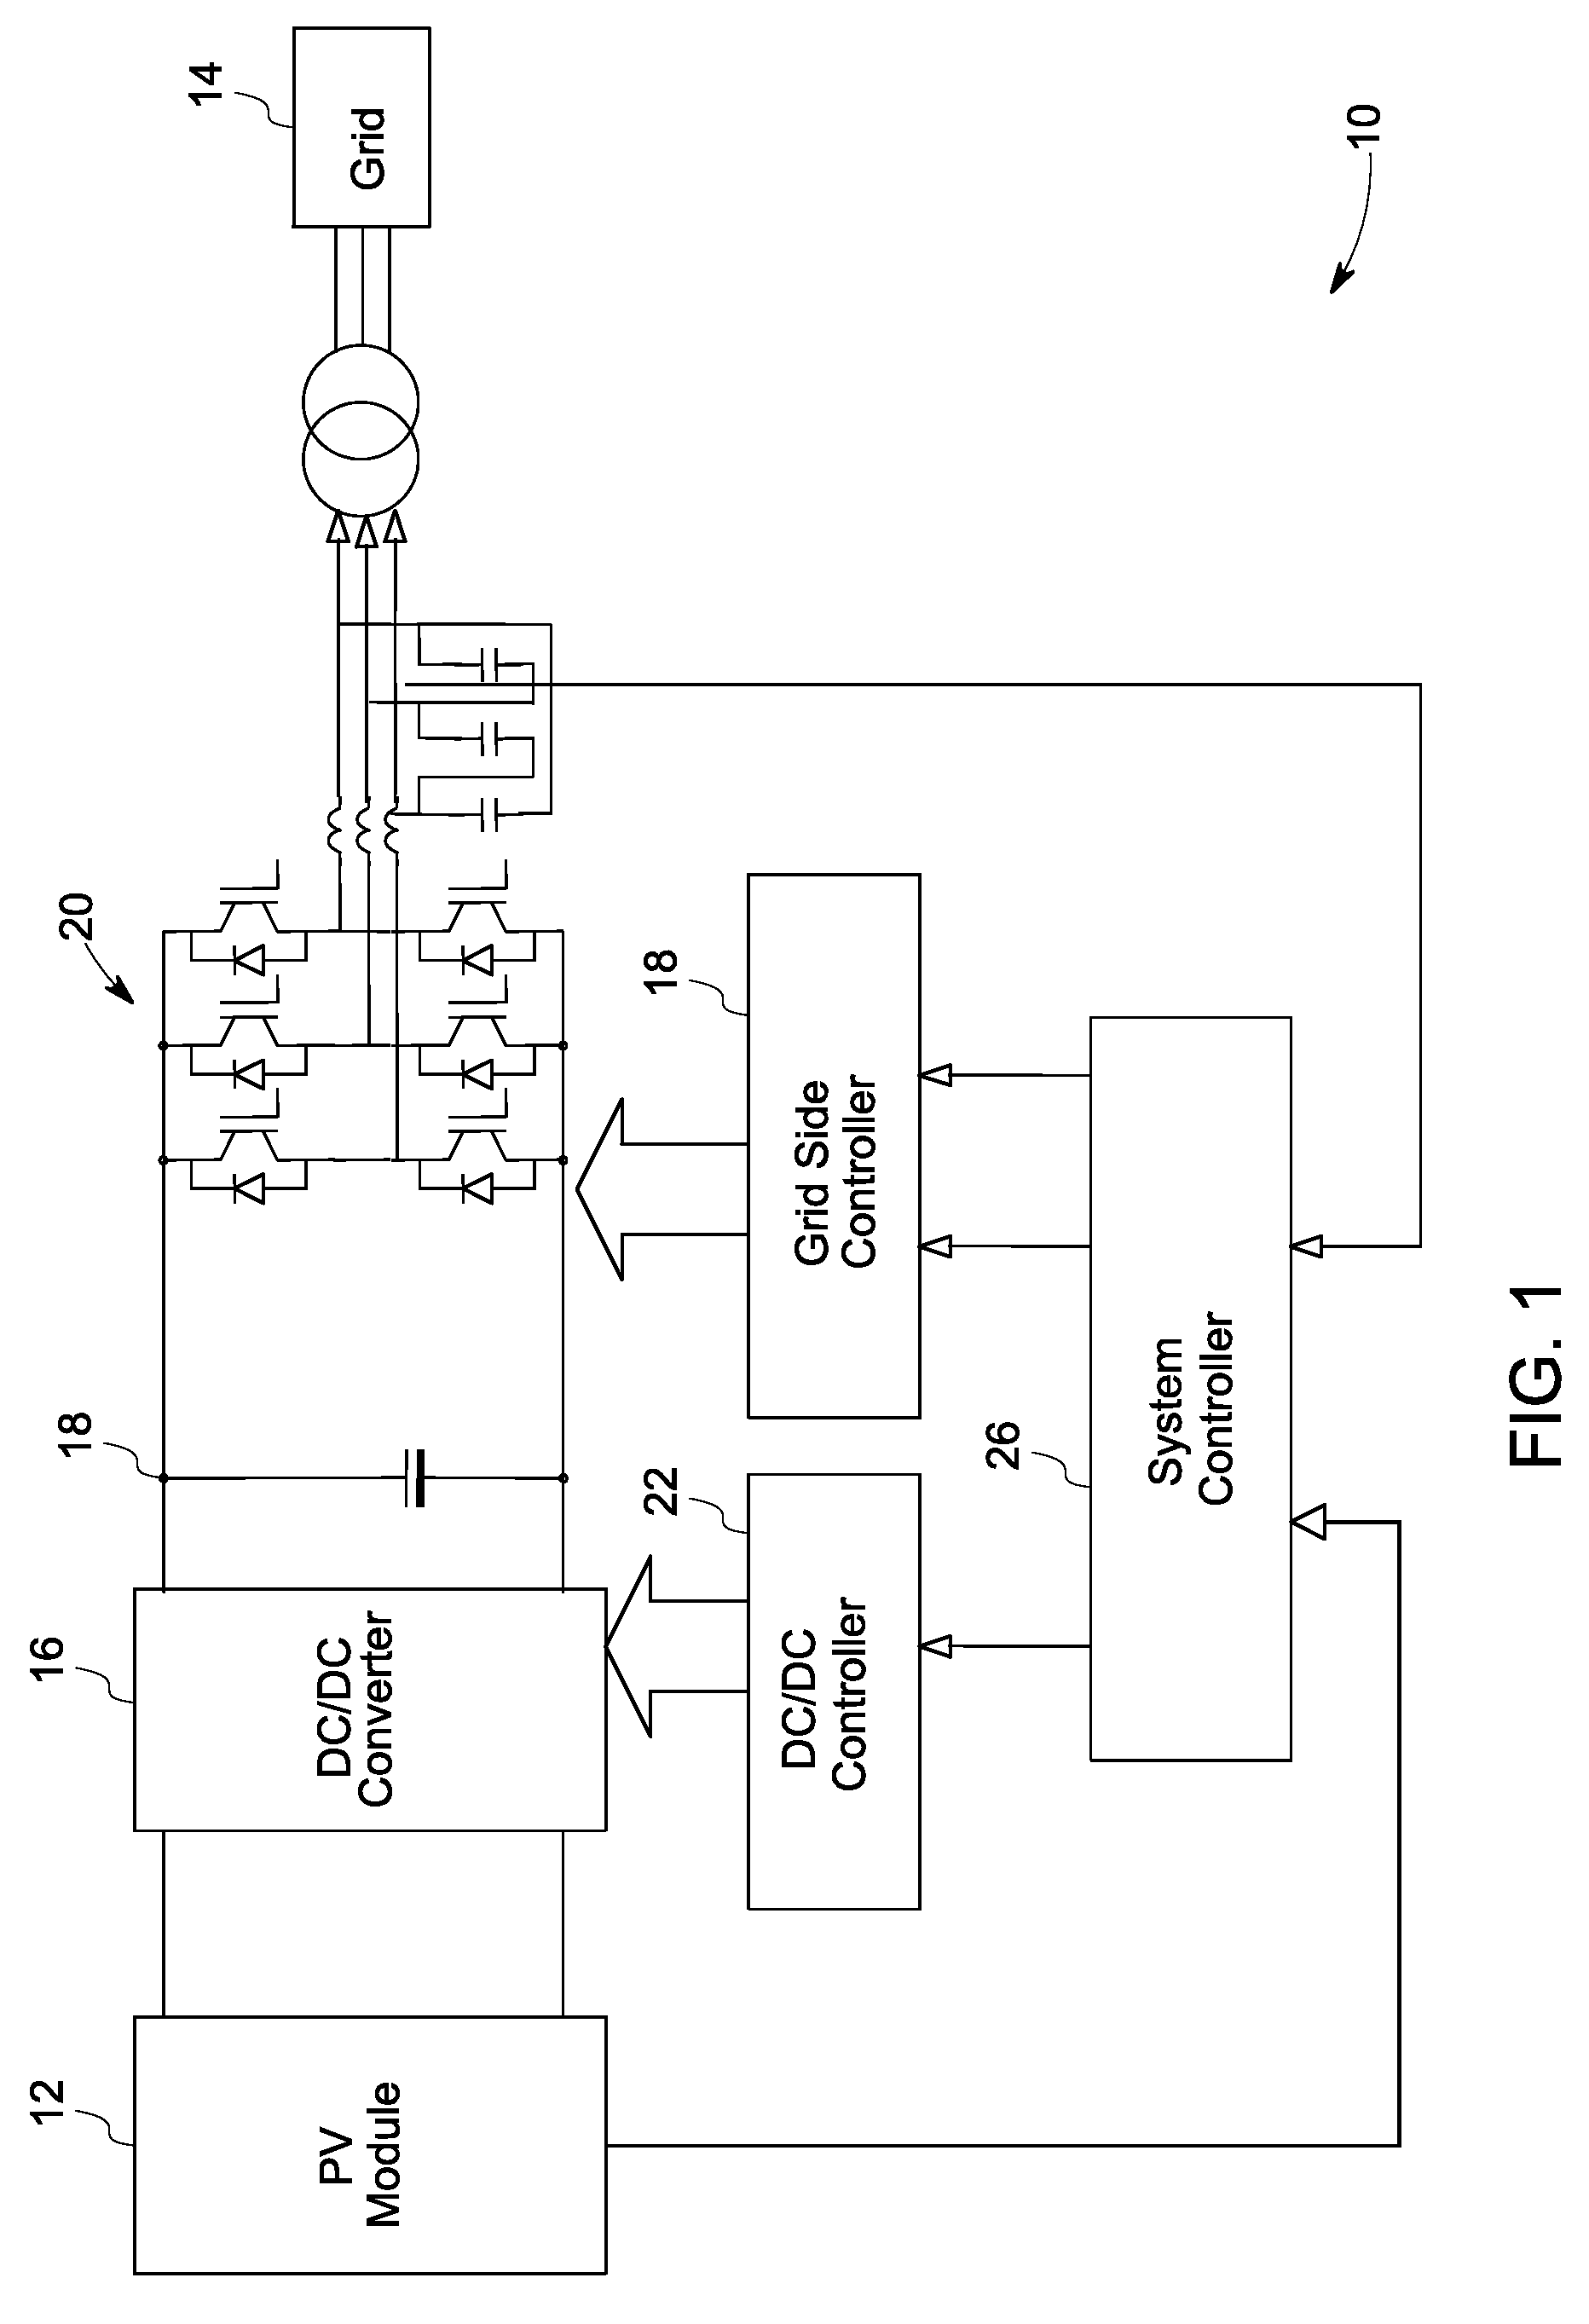 Solar inverter and control method